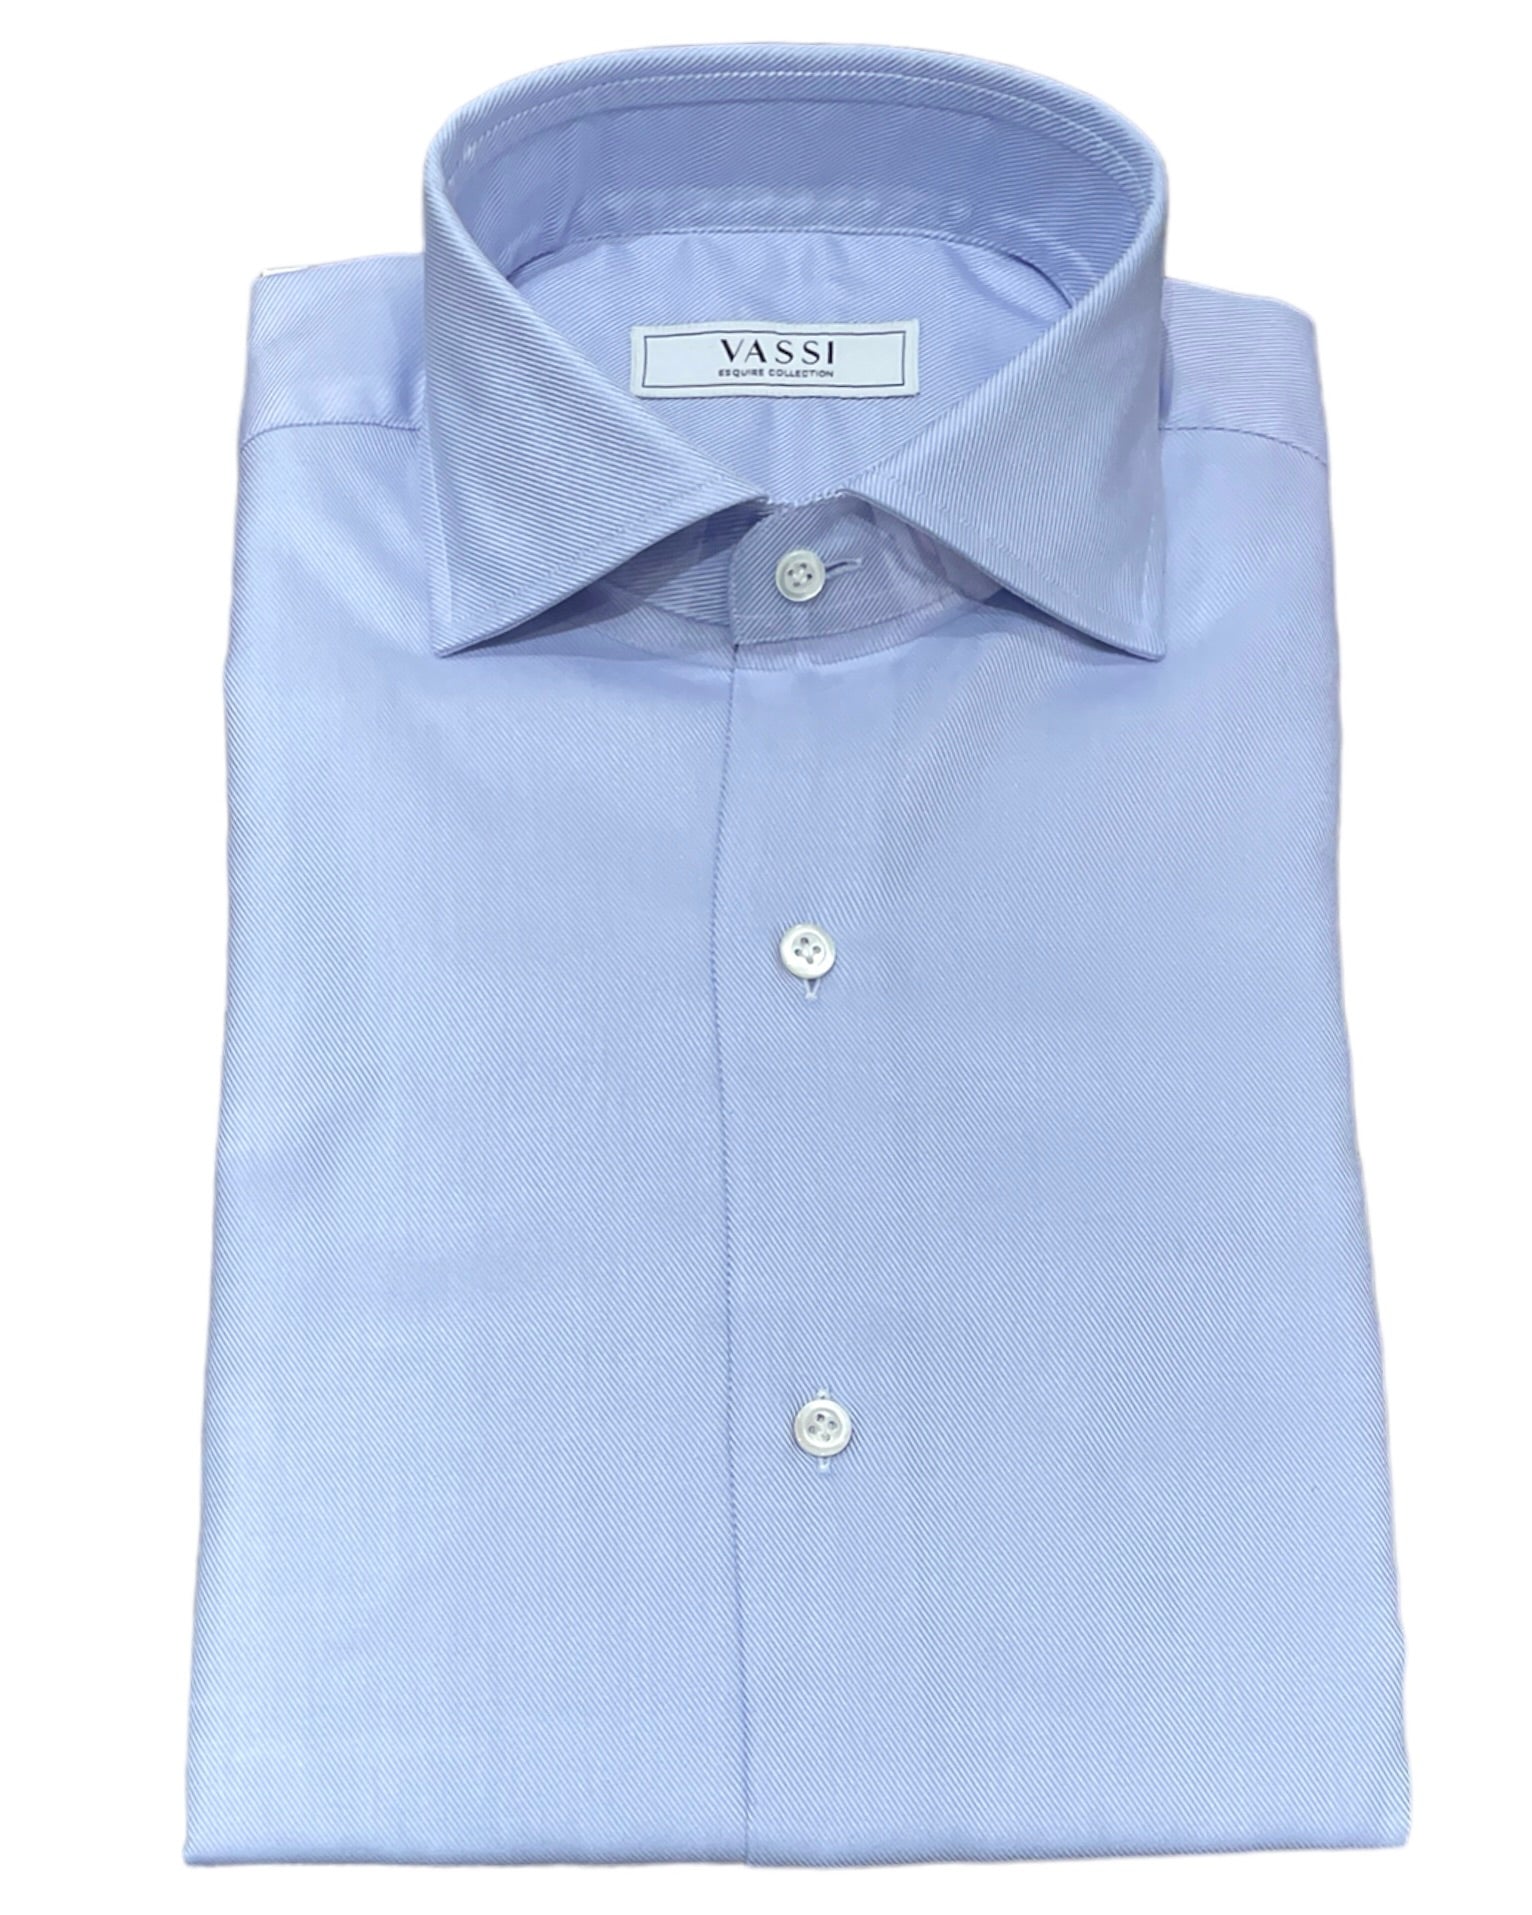 VASSI - Thomas Mason Journey Twill Shirt - Light Blue DRESS SHIRTS15